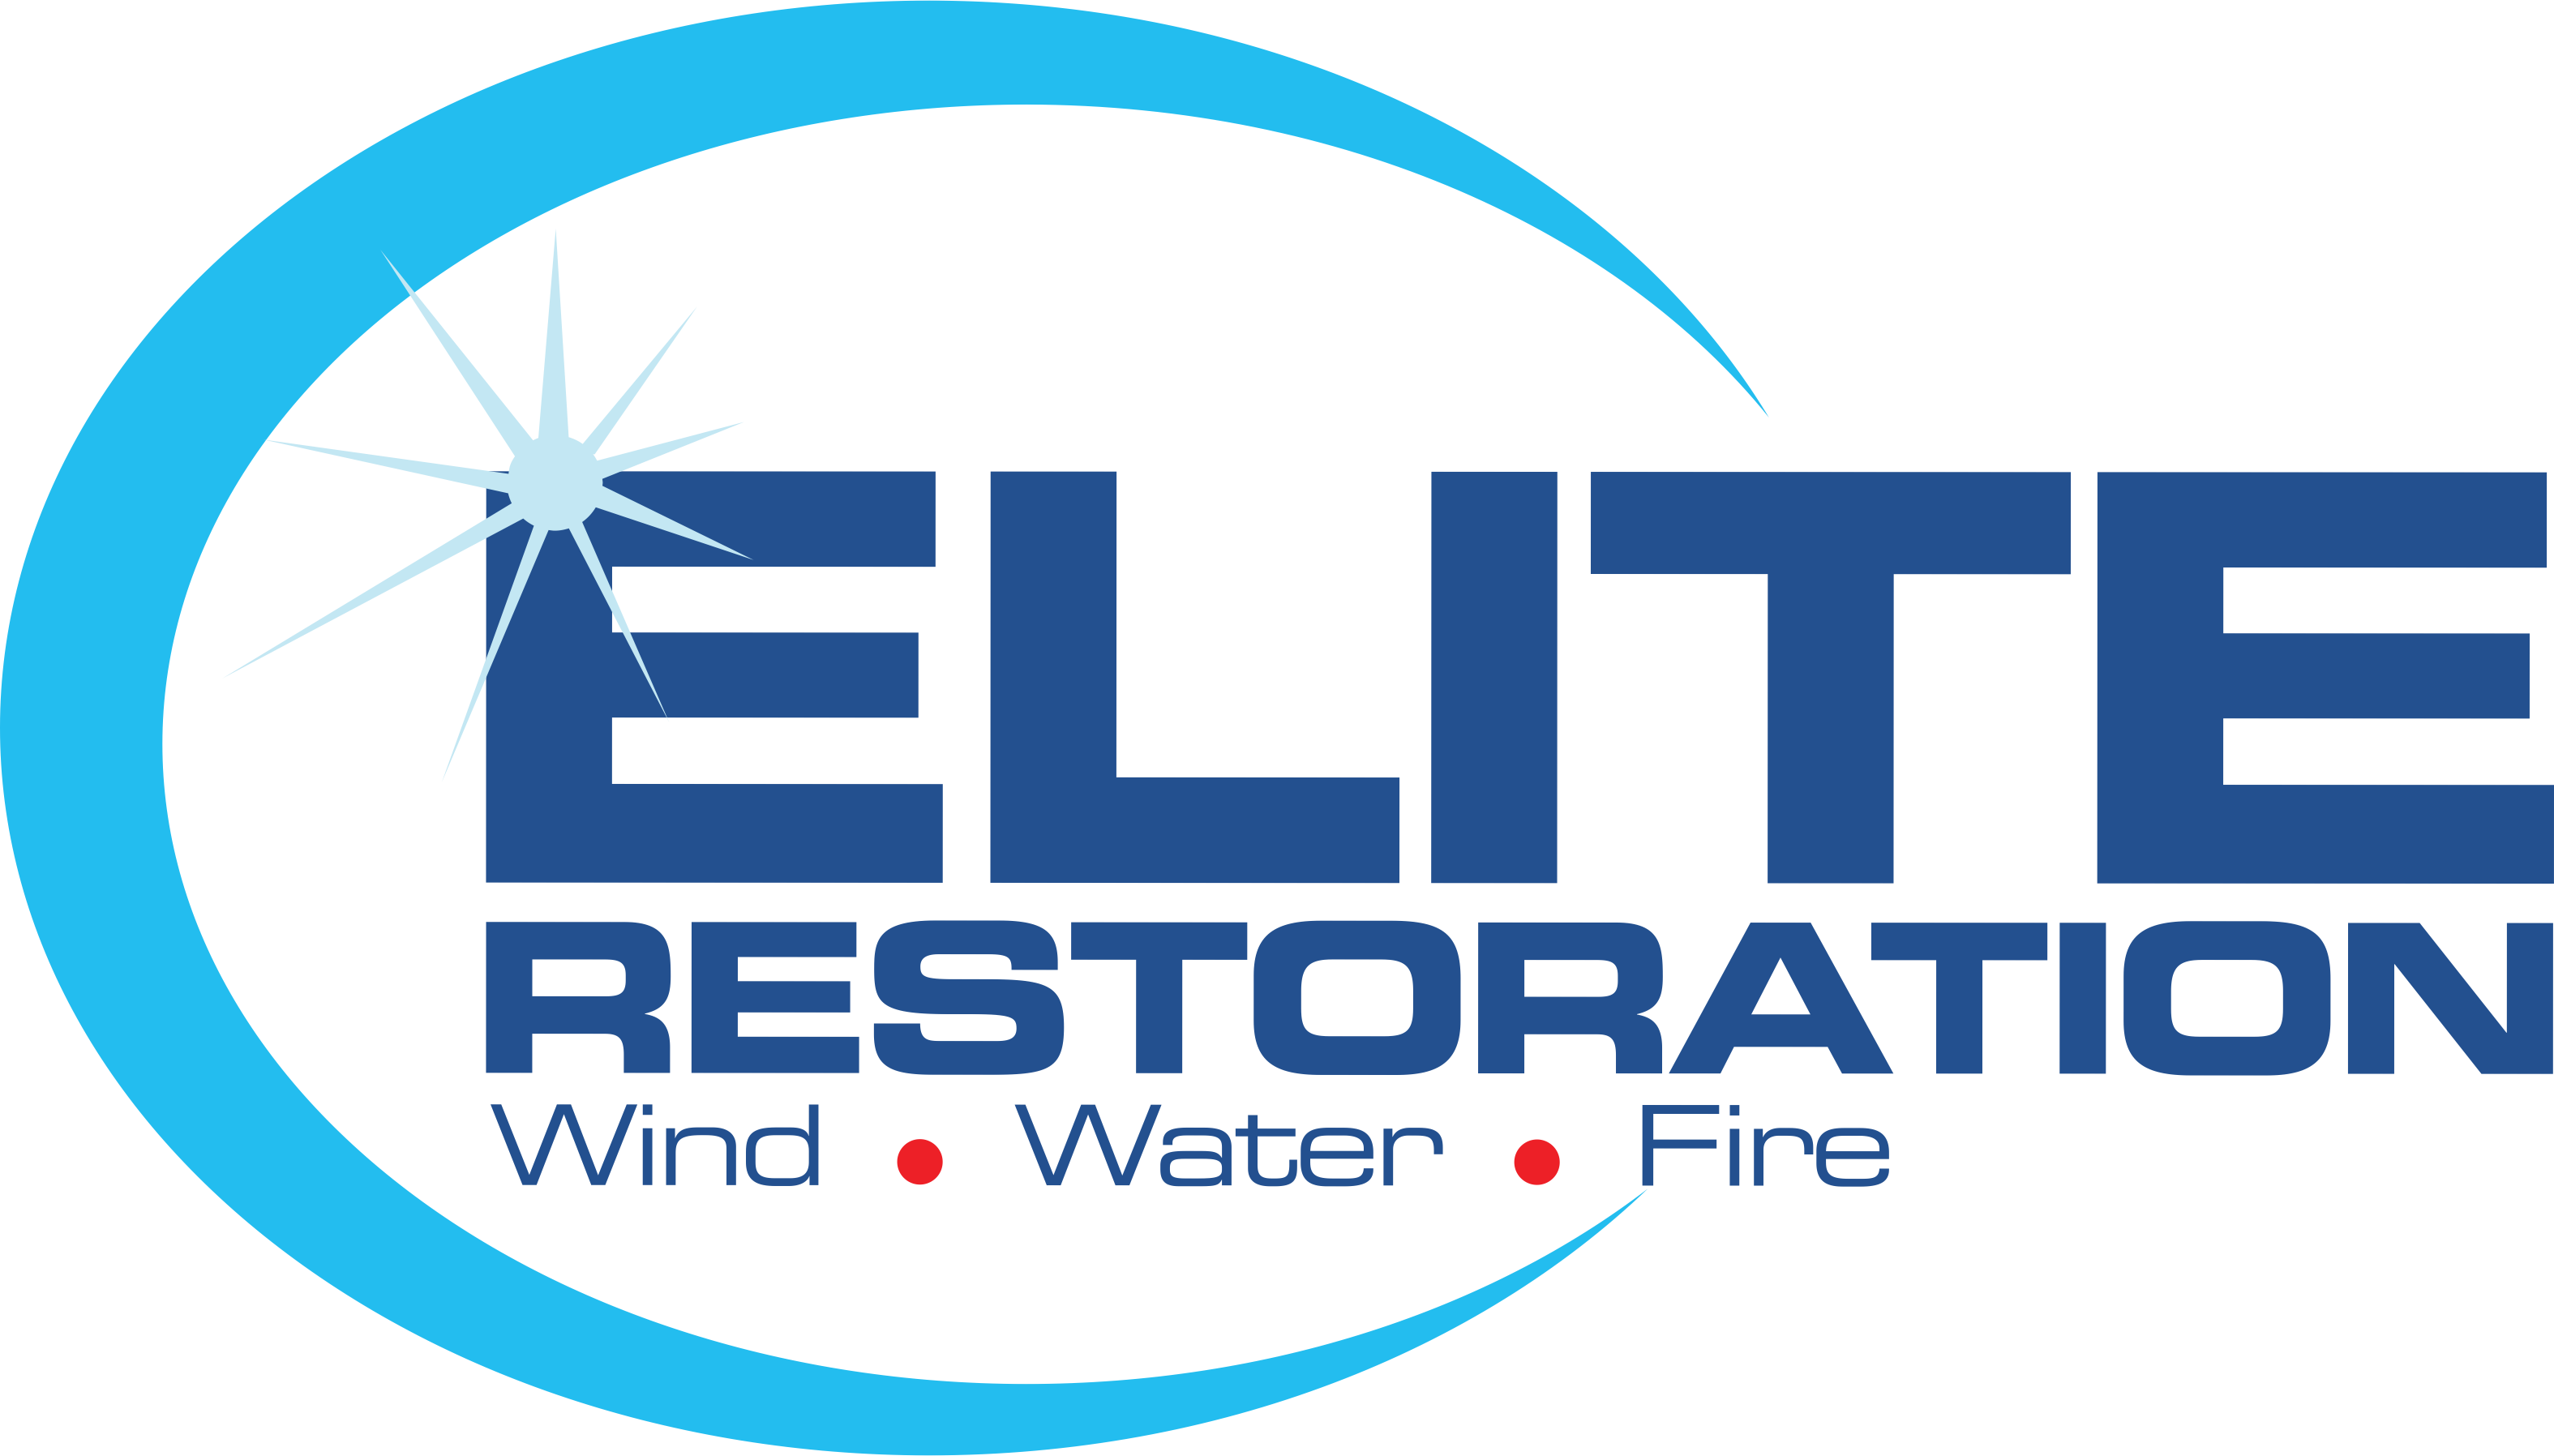 Elite Restoration